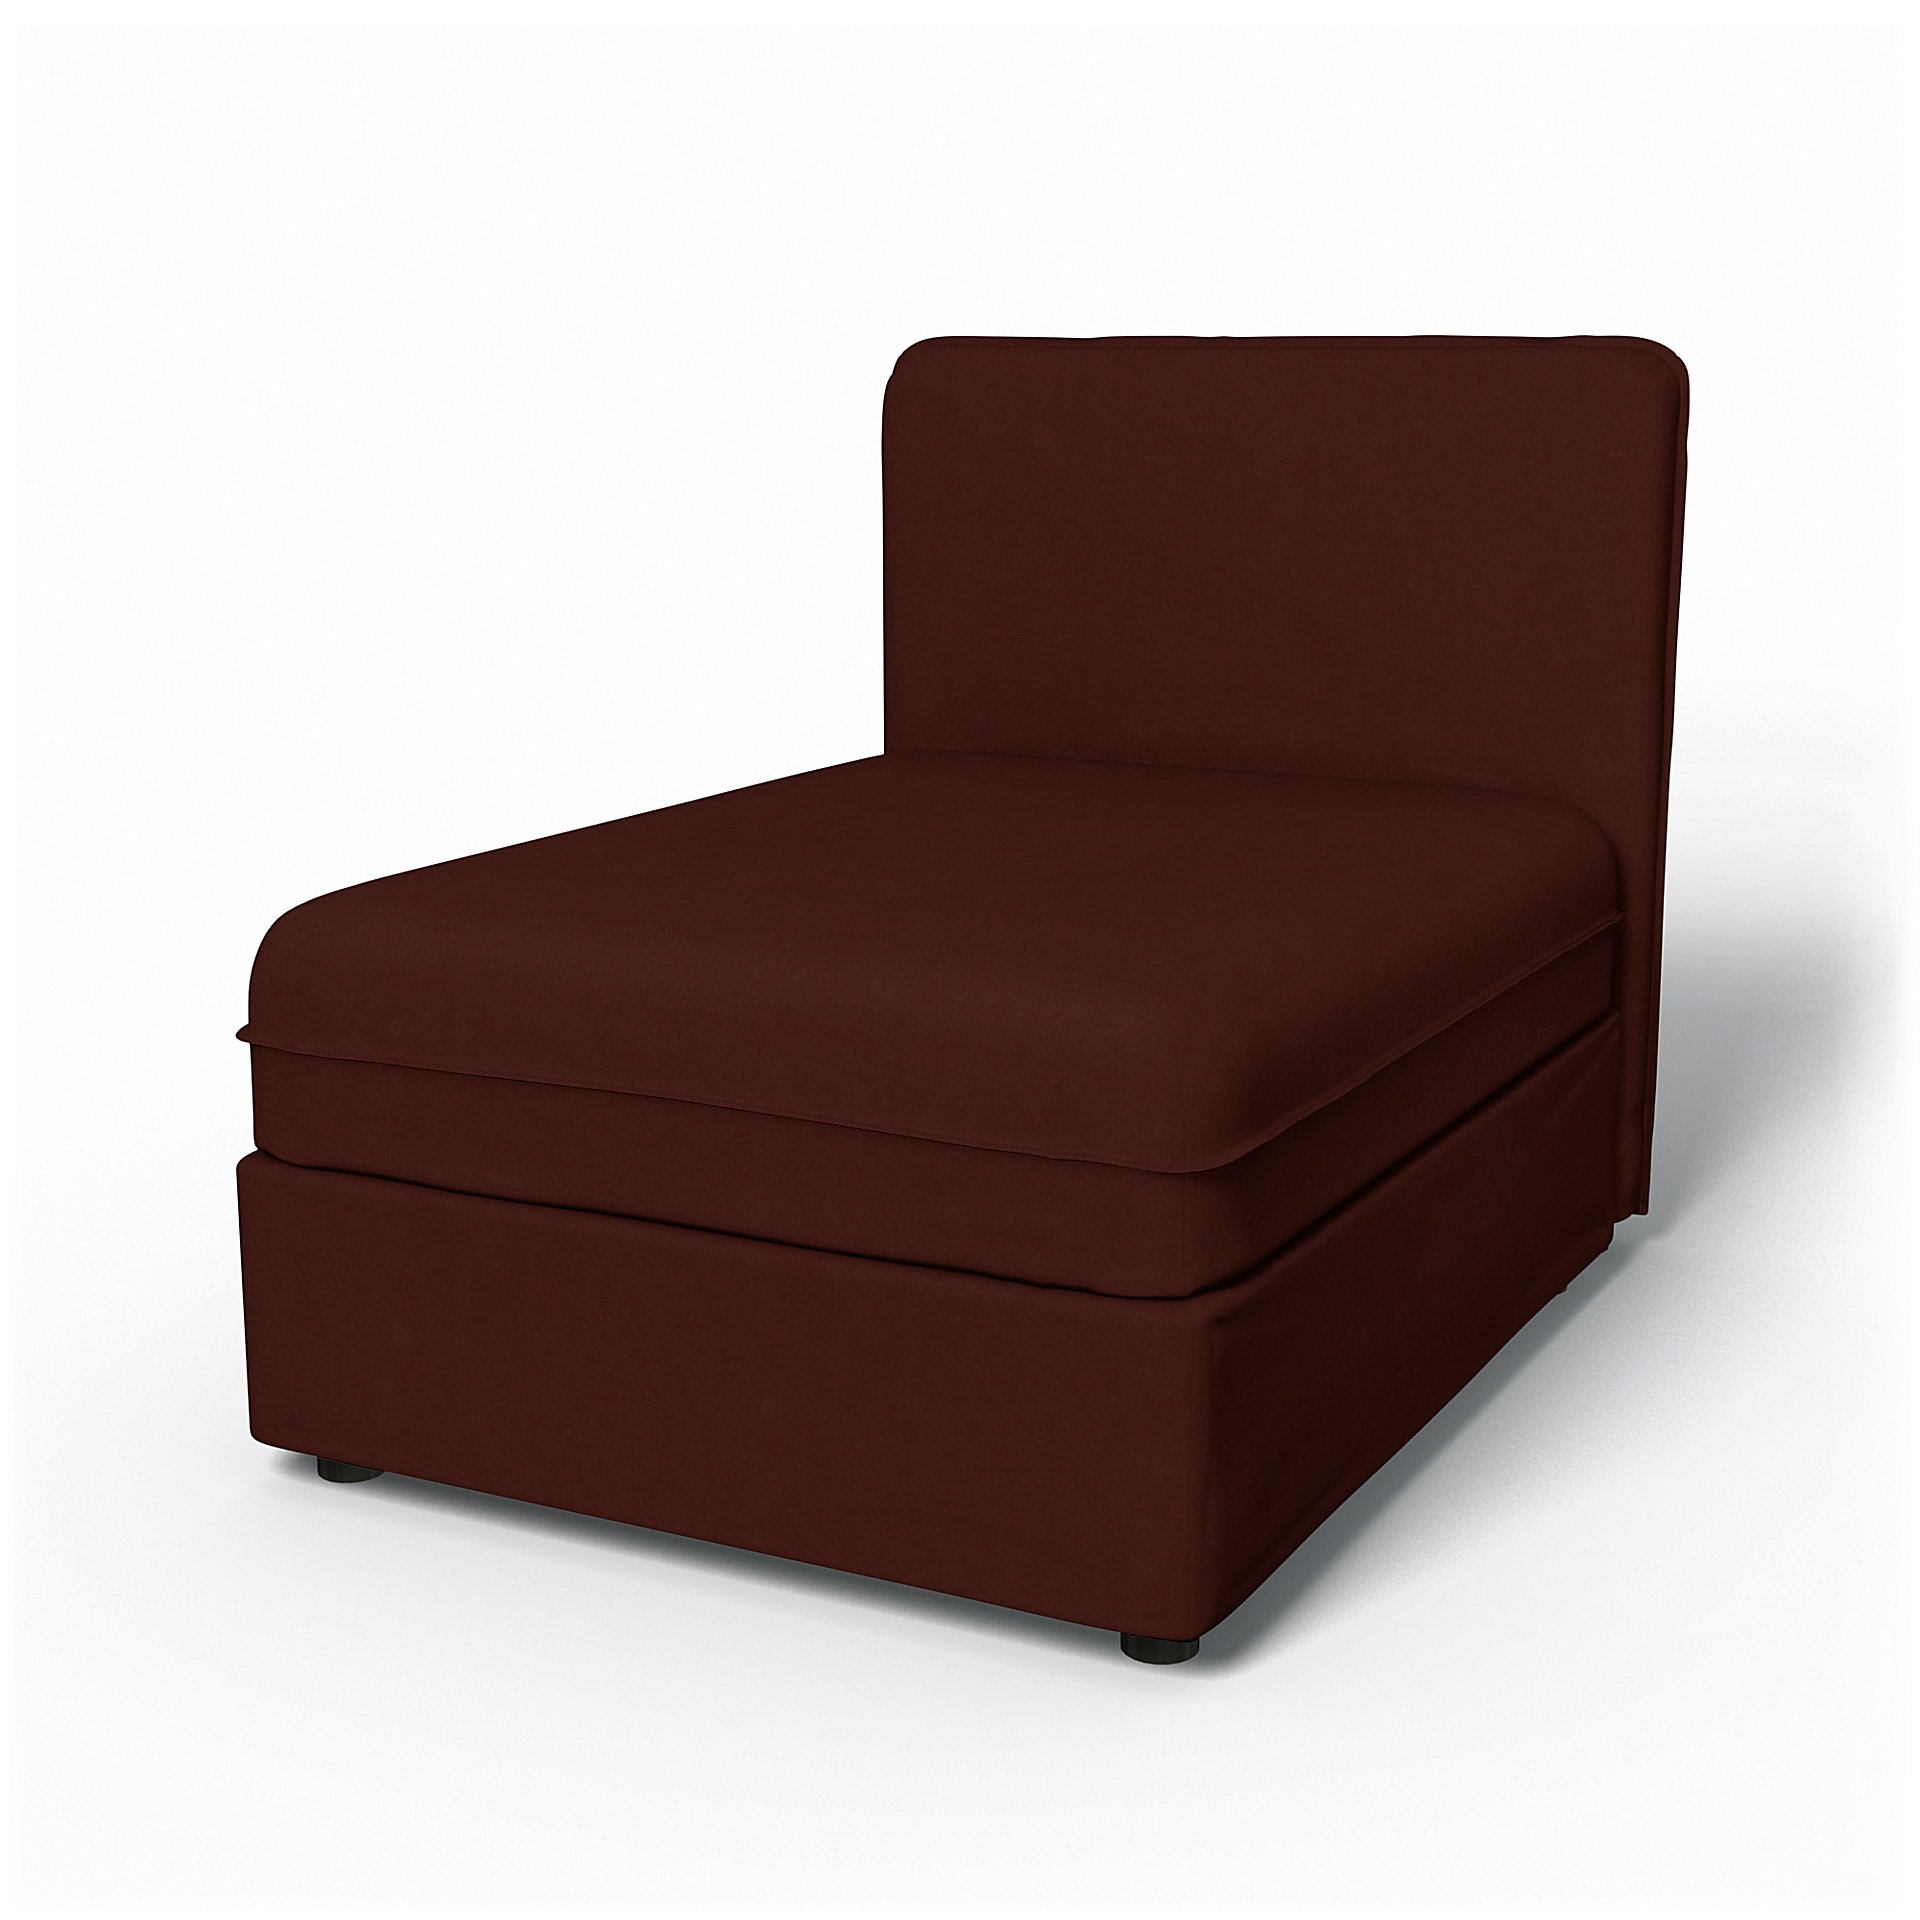 IKEA - Vallentuna Seat Module with Low Back Cover 80x100cm 32x39in, Ground Coffee, Velvet - Bemz